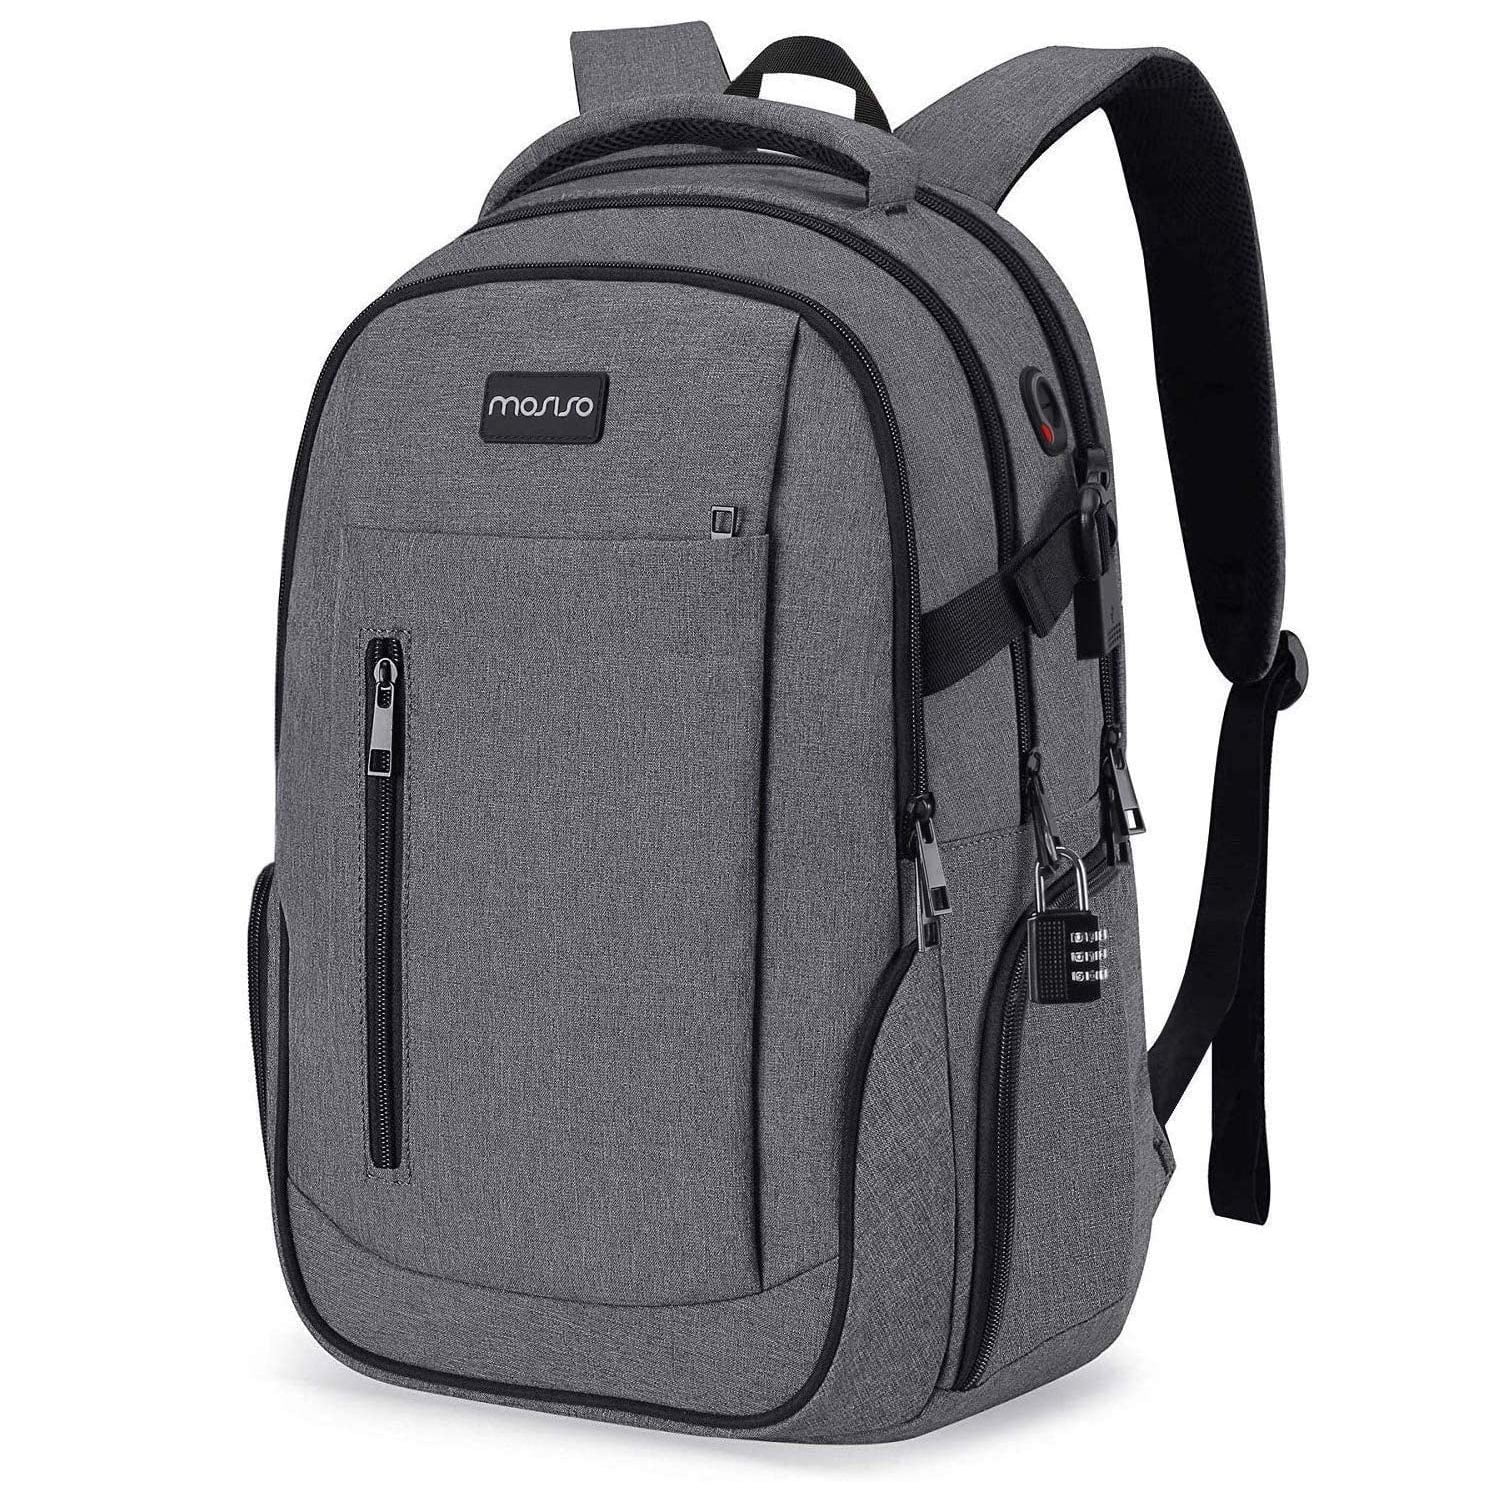 Solo Duane Laptop Briefcase to Backpack Hybrid - Walmart.com